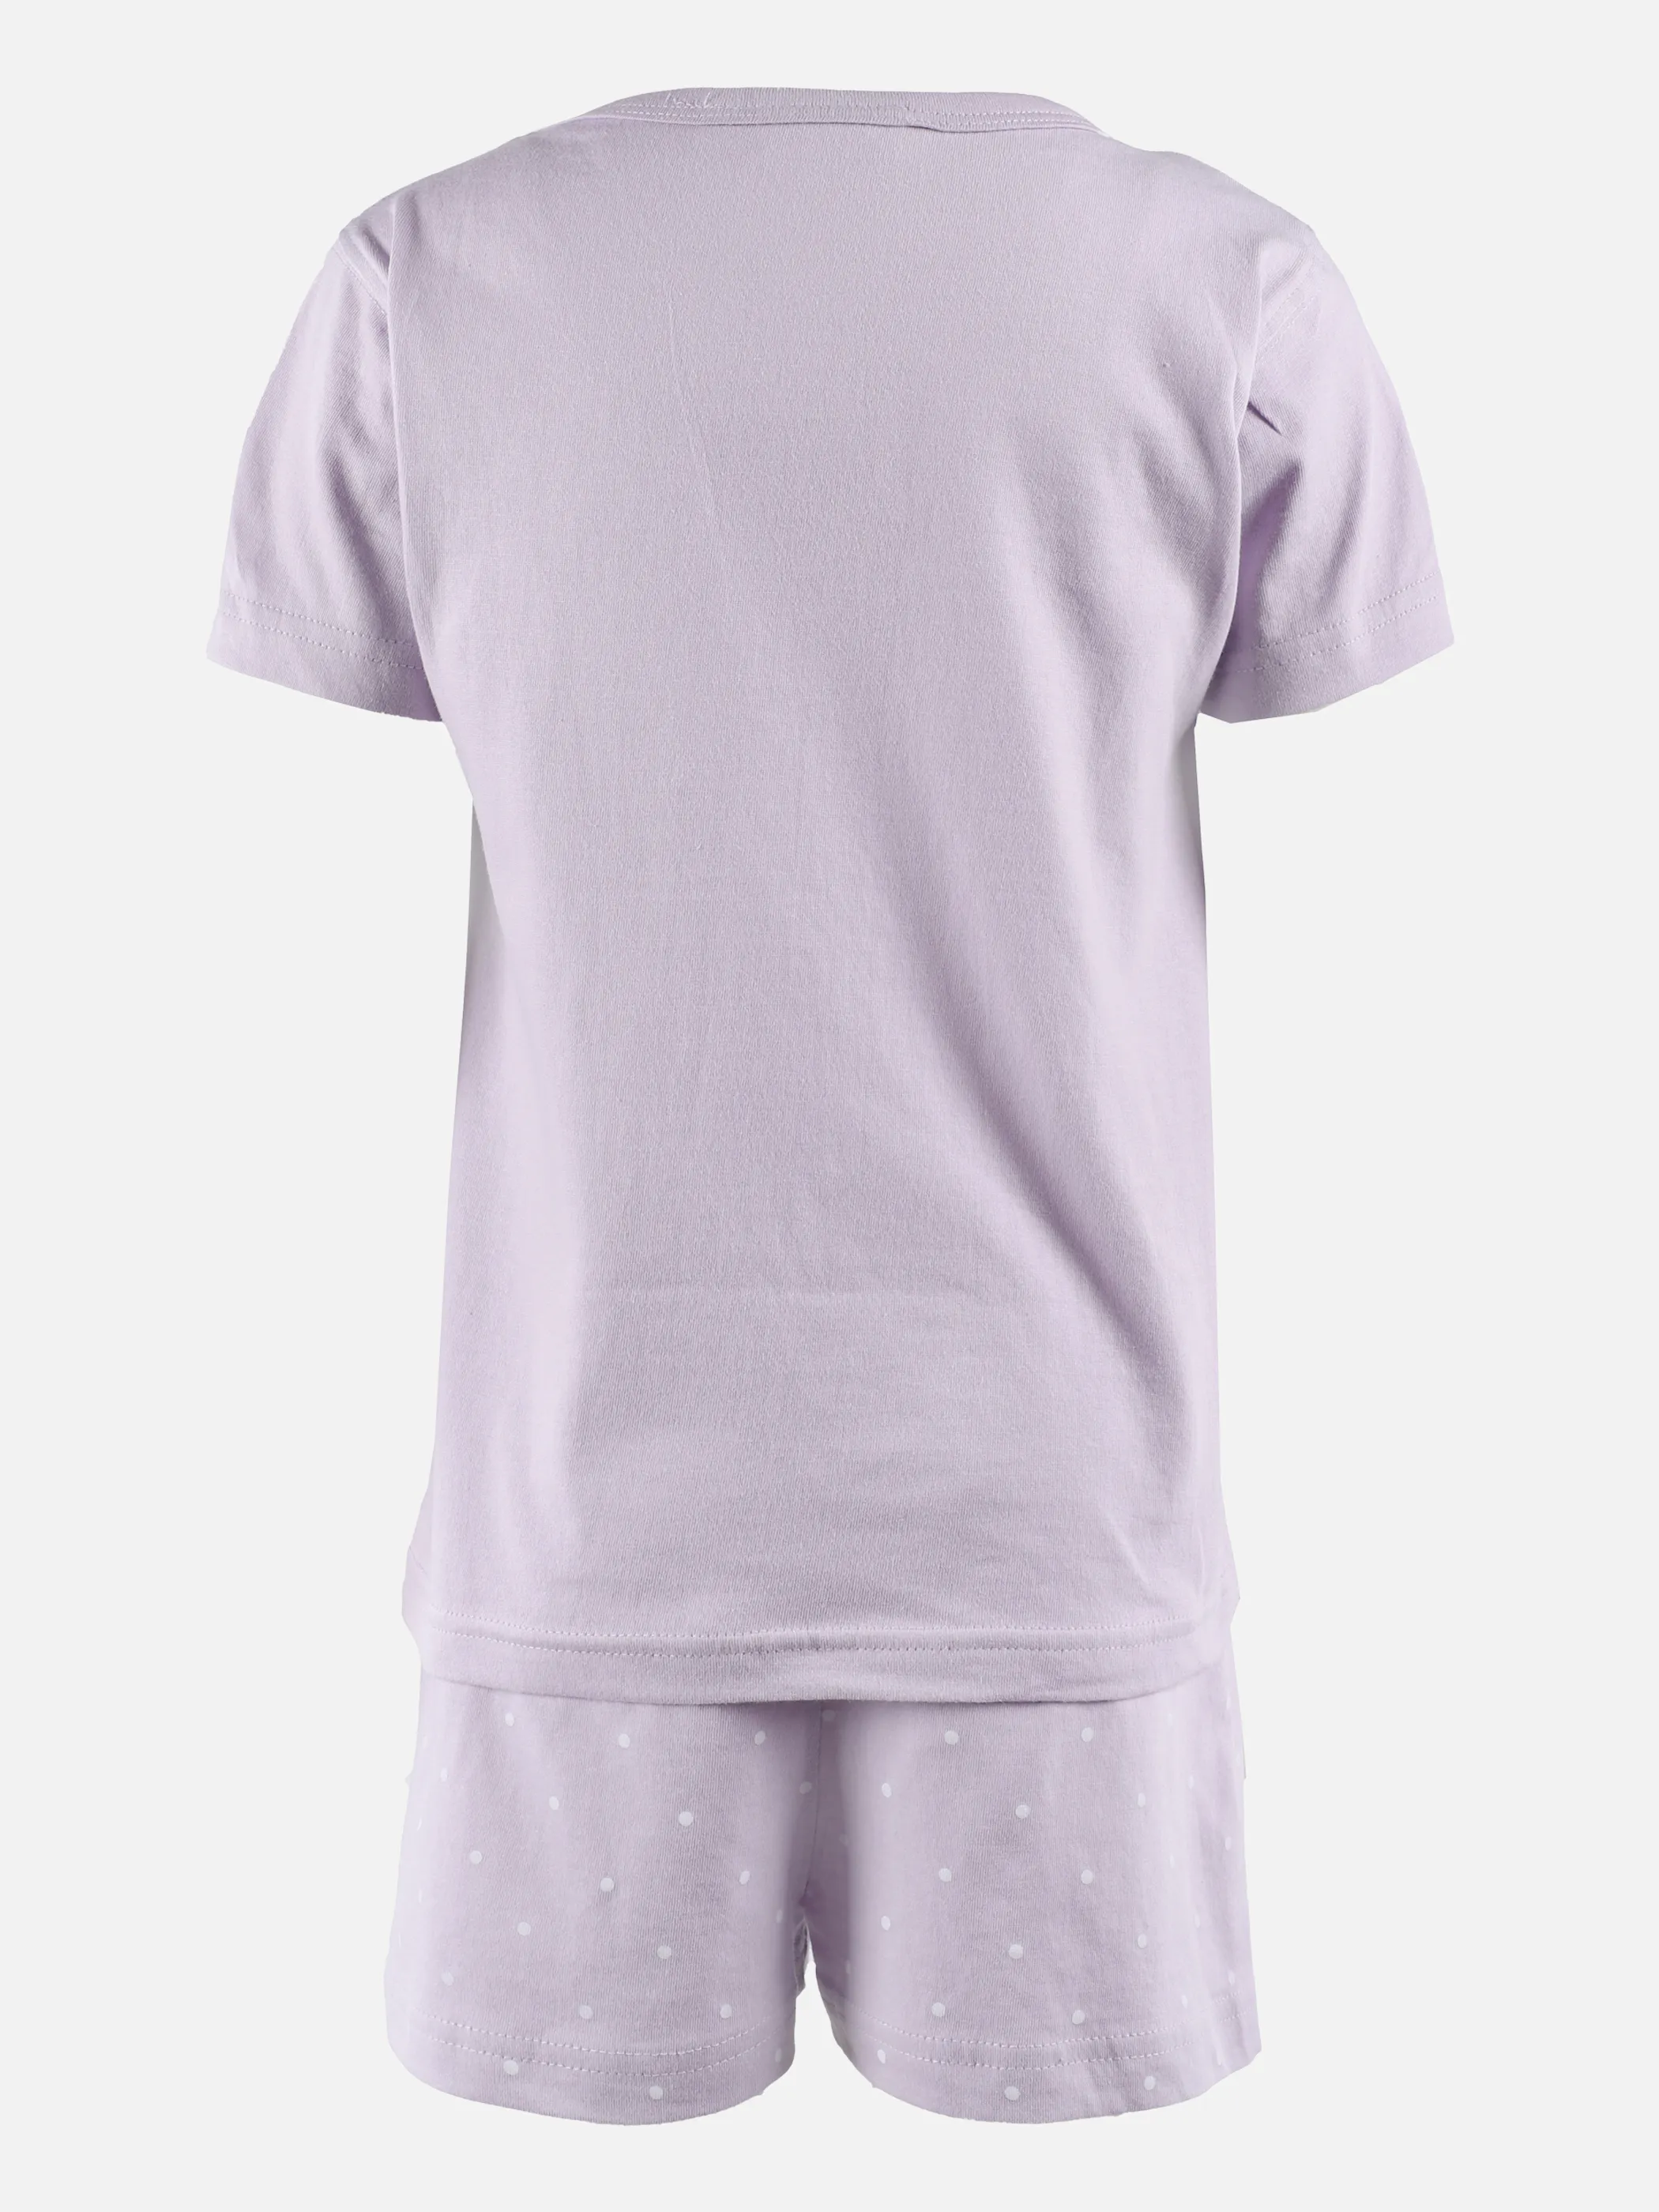 Stop + Go MG Pyjama Einhorn Shirt 1/2 Arm Pink 873700 PINK 2